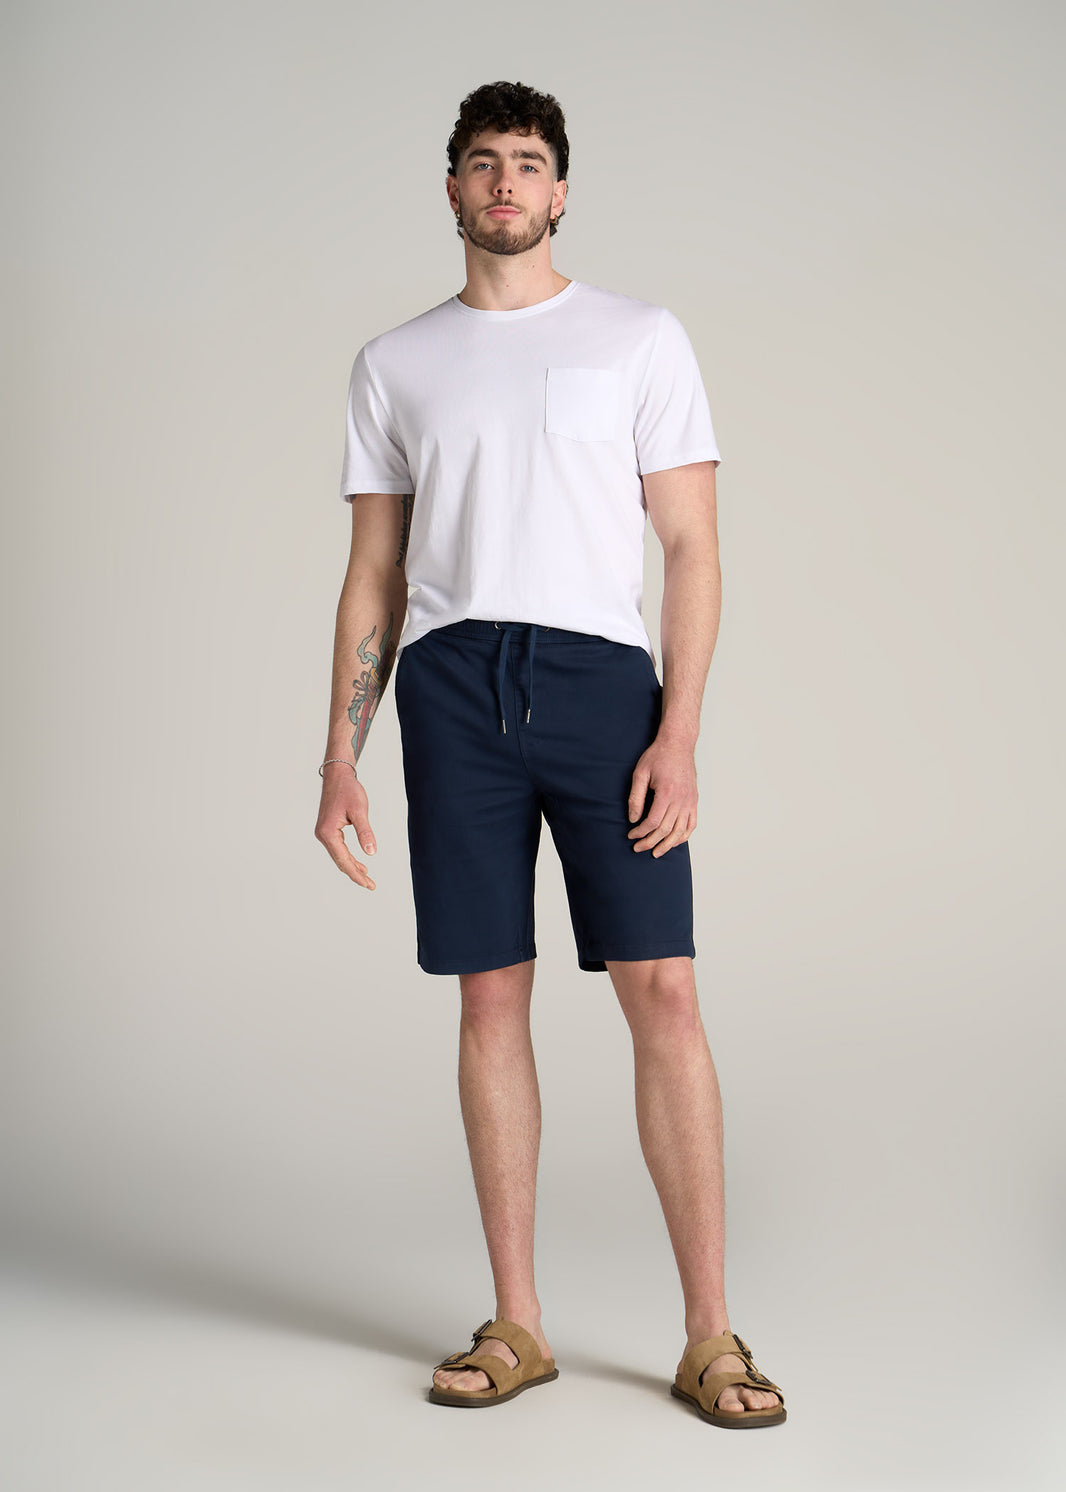 Shorts for Tall Men| Men's Tall Shorts | American Tall